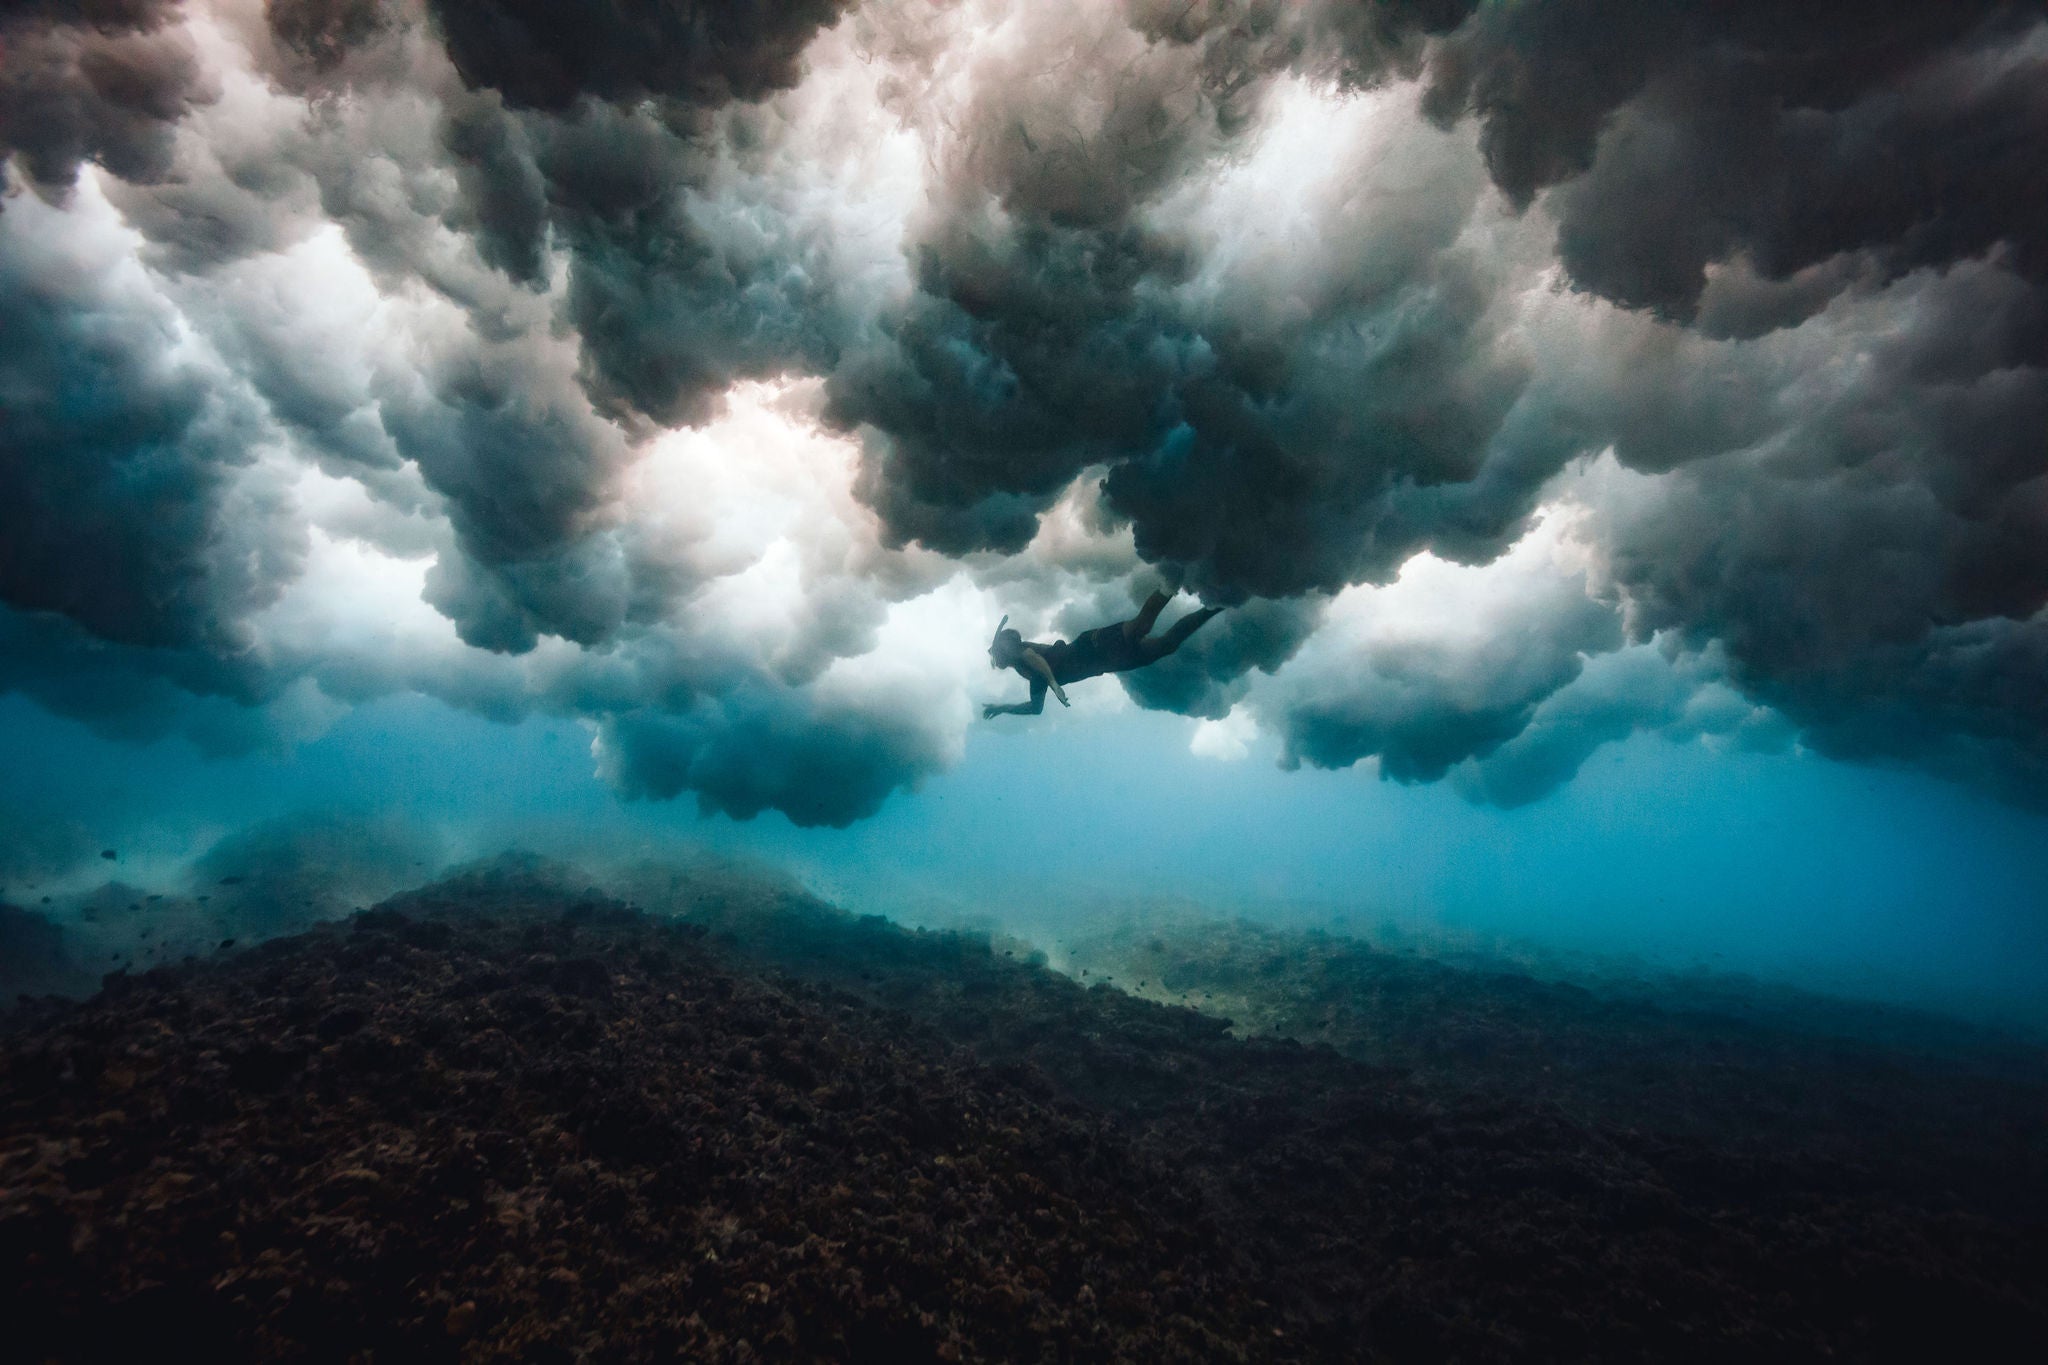 Underwater photography on location in the Indian ocean, surf adventure travel, Below the breaking waves, surf lifestyle ocean adventure.